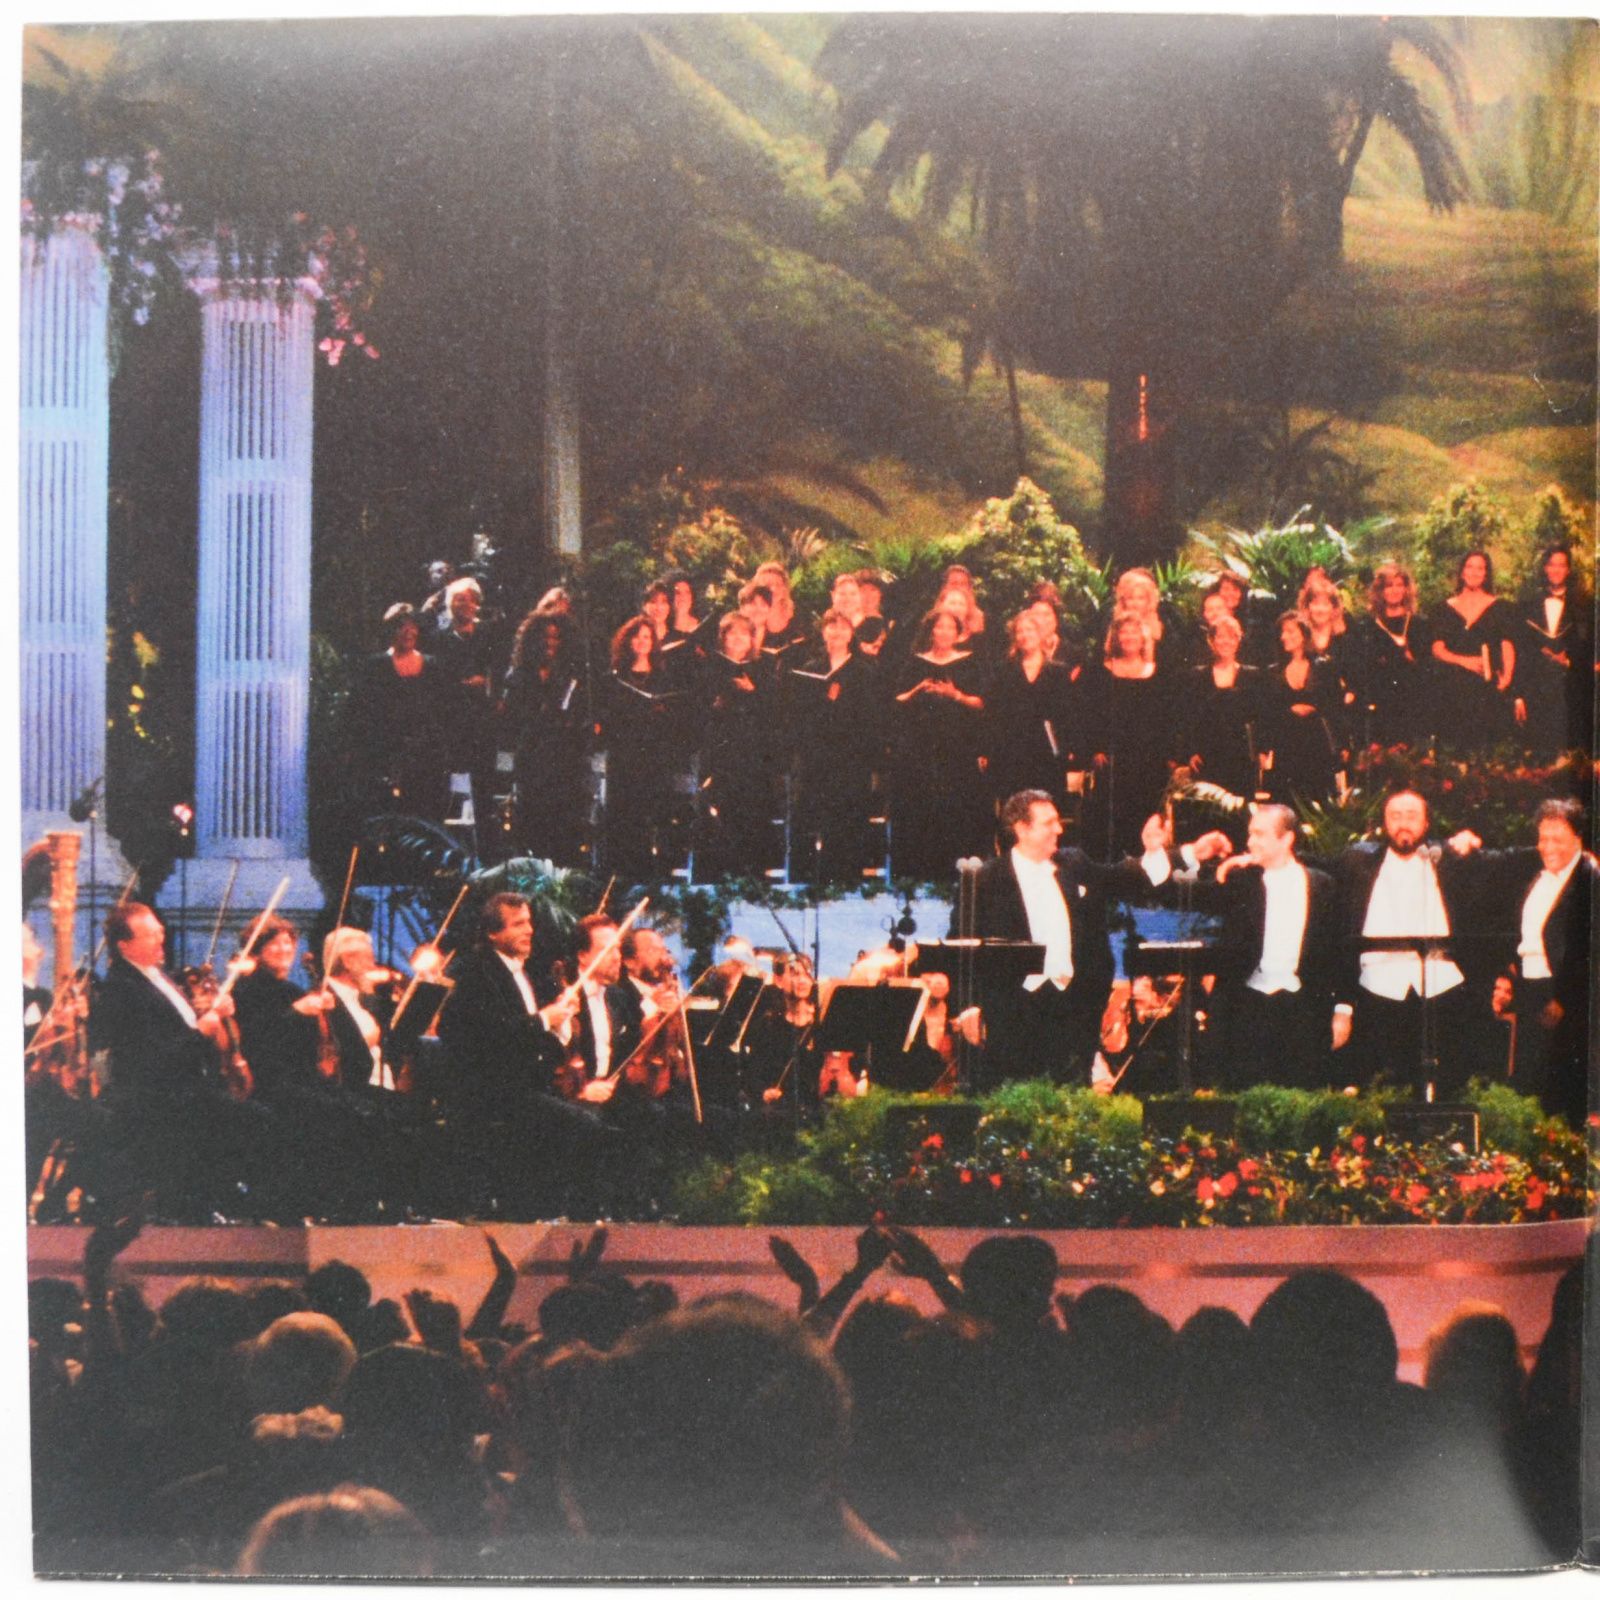 Carreras - Domingo - Pavarotti with Mehta — The 3 Tenors In Concert 1994 (2LP), 1994